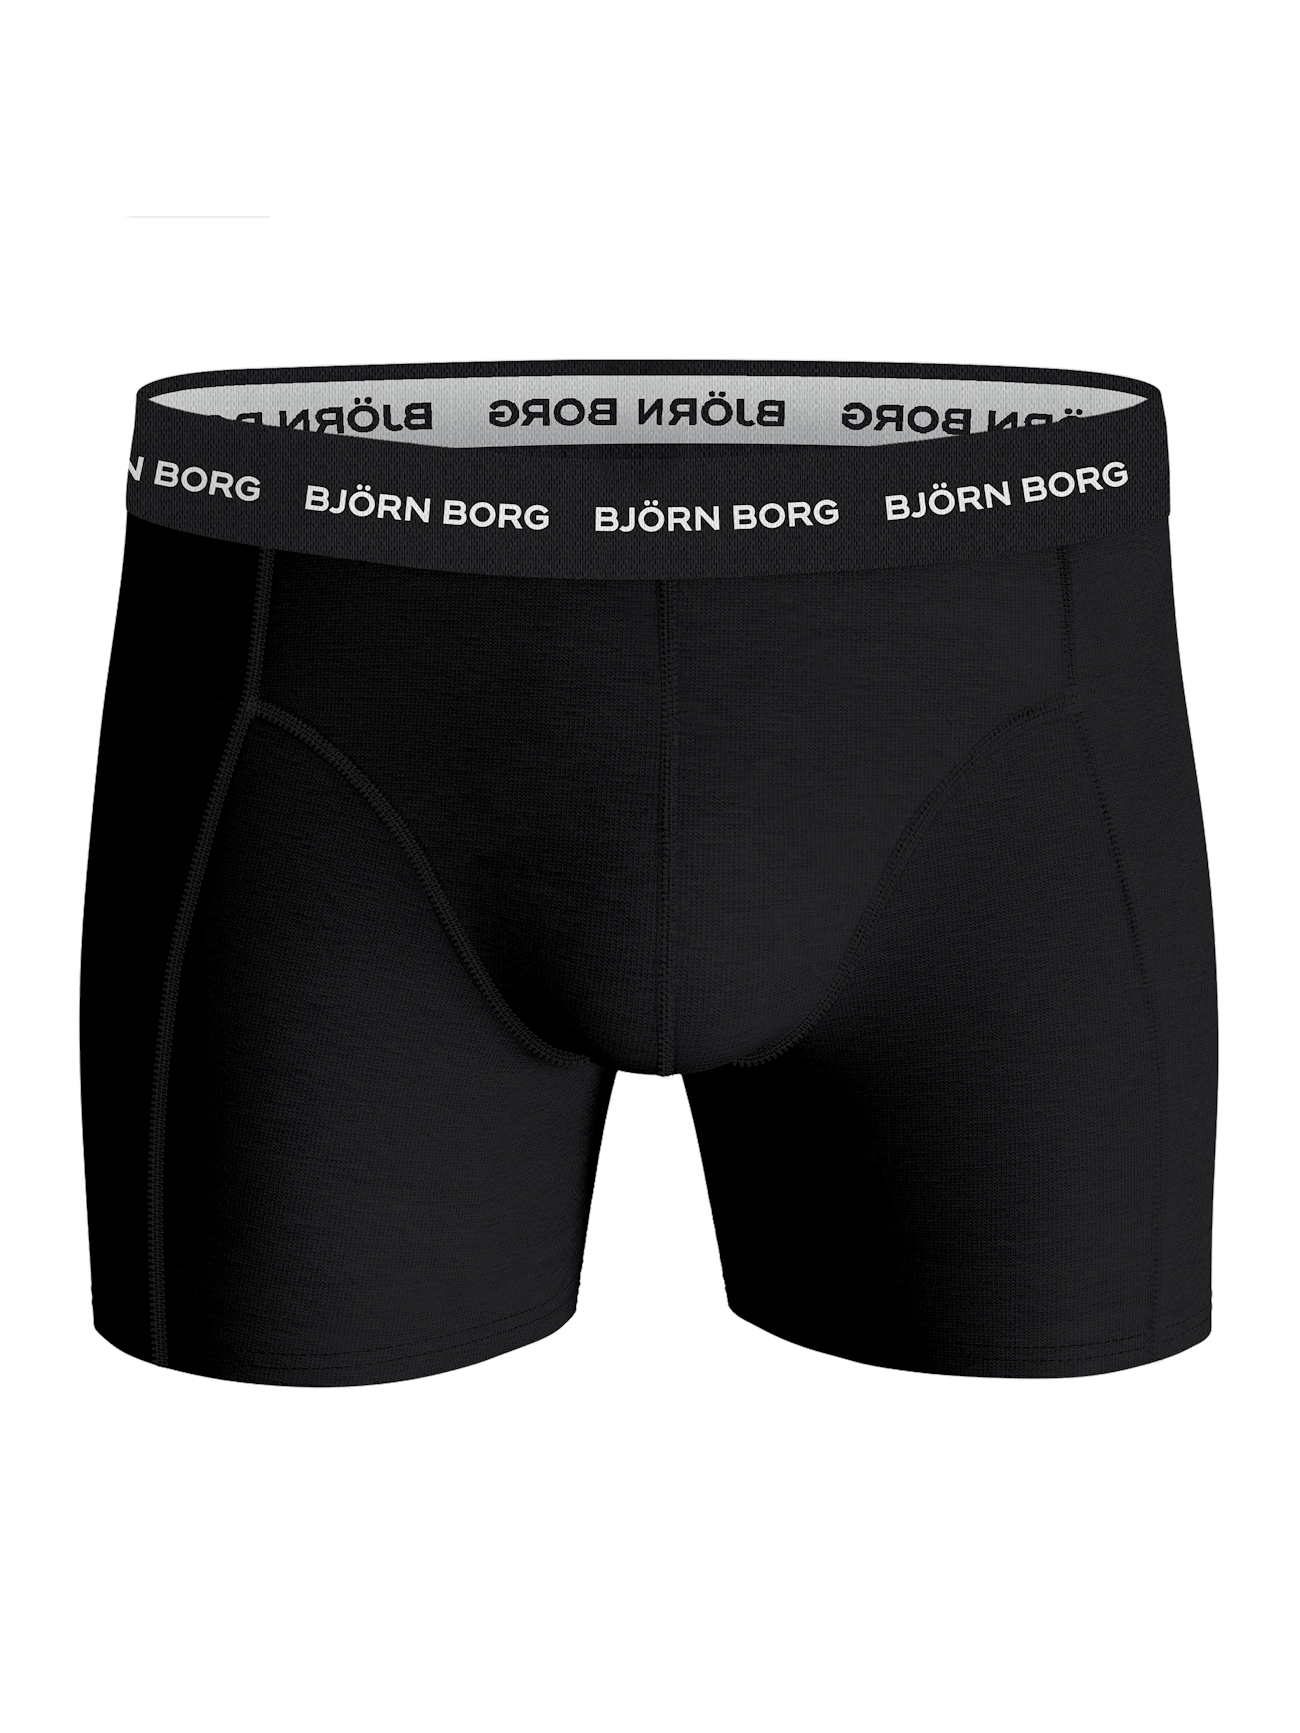 Boxer Shorts Briefs 100% Merino Wool Womens Underwear Panties